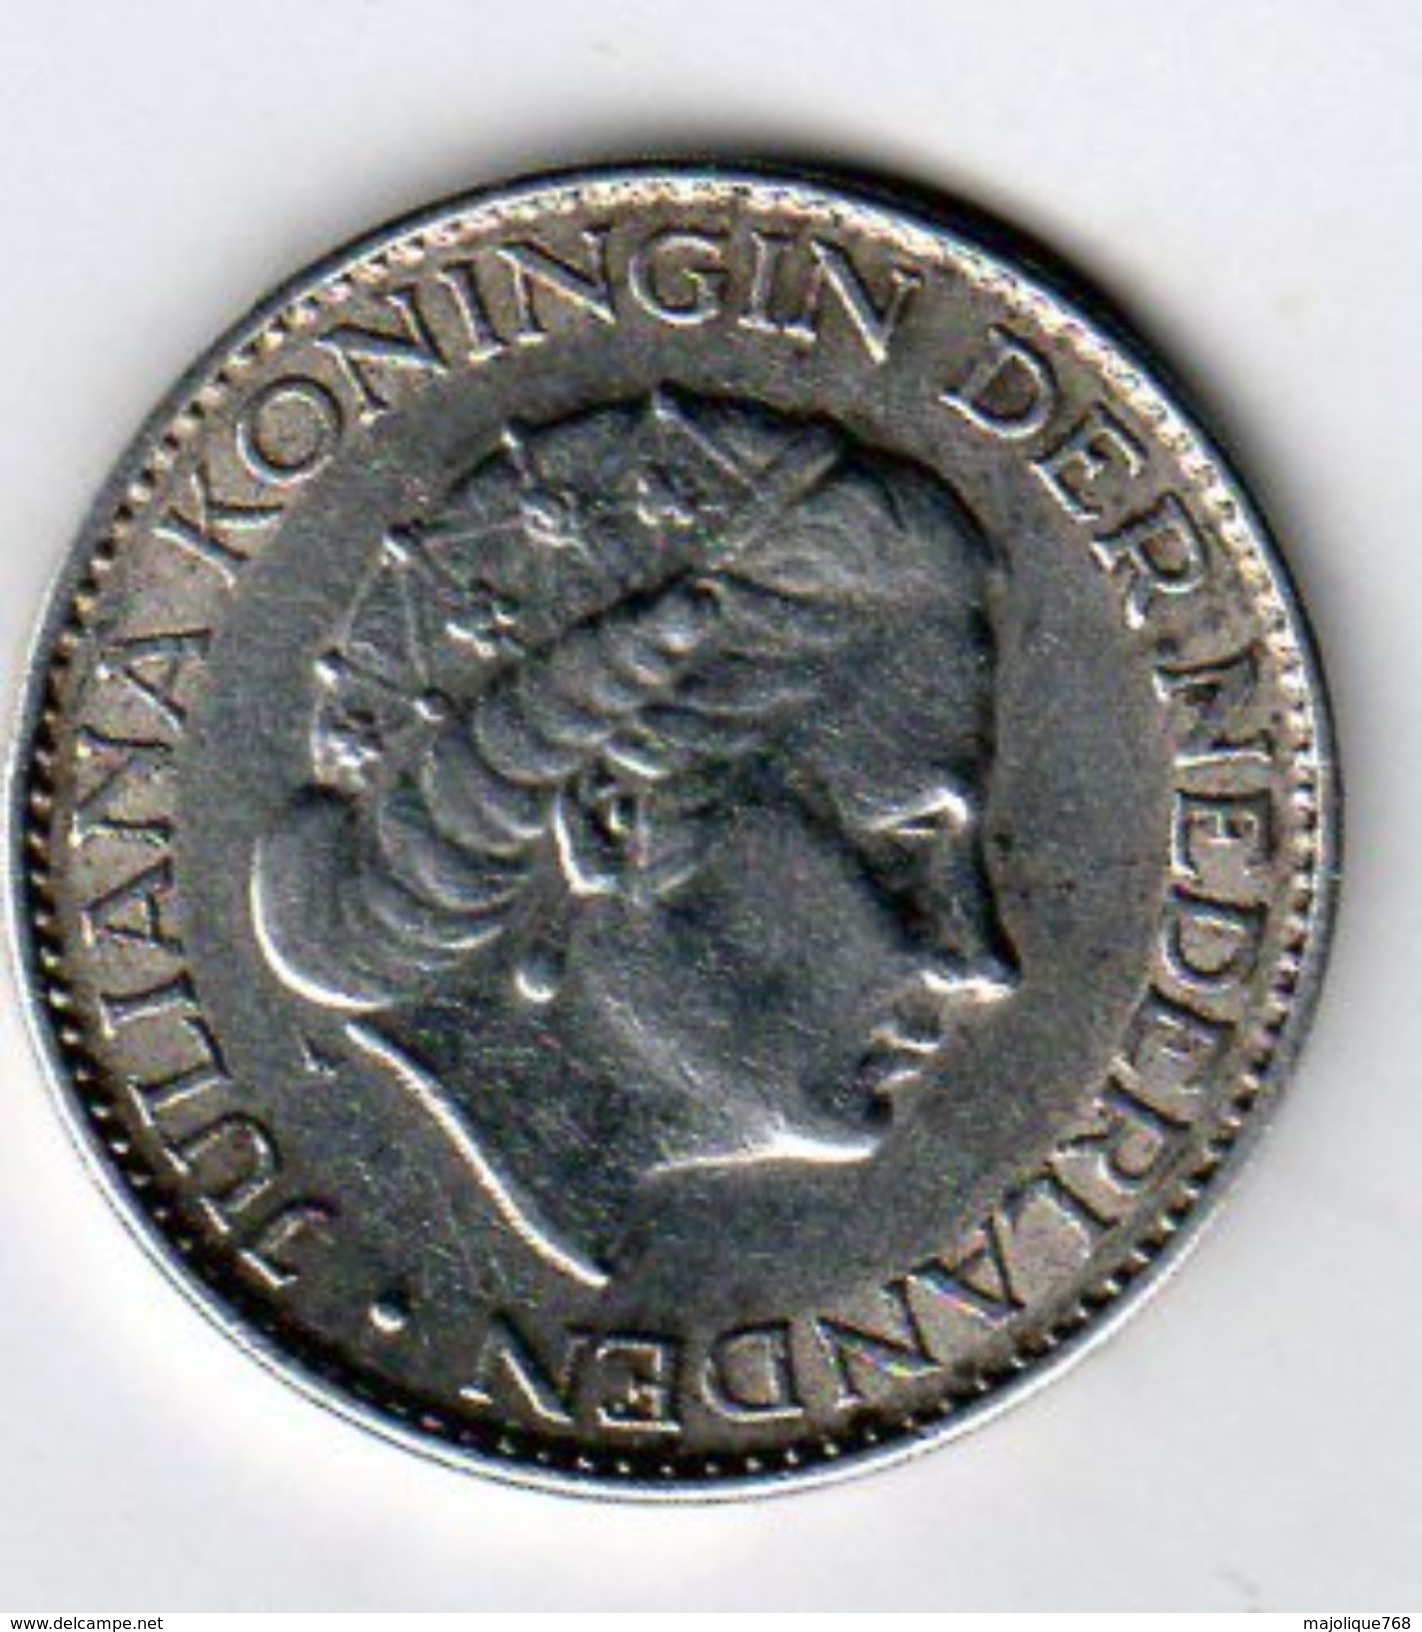 Pièce De Monnaie Du Pays-bas De 1 Gulden Argent 1963 En S U P - - Zilveren En Gouden Munten